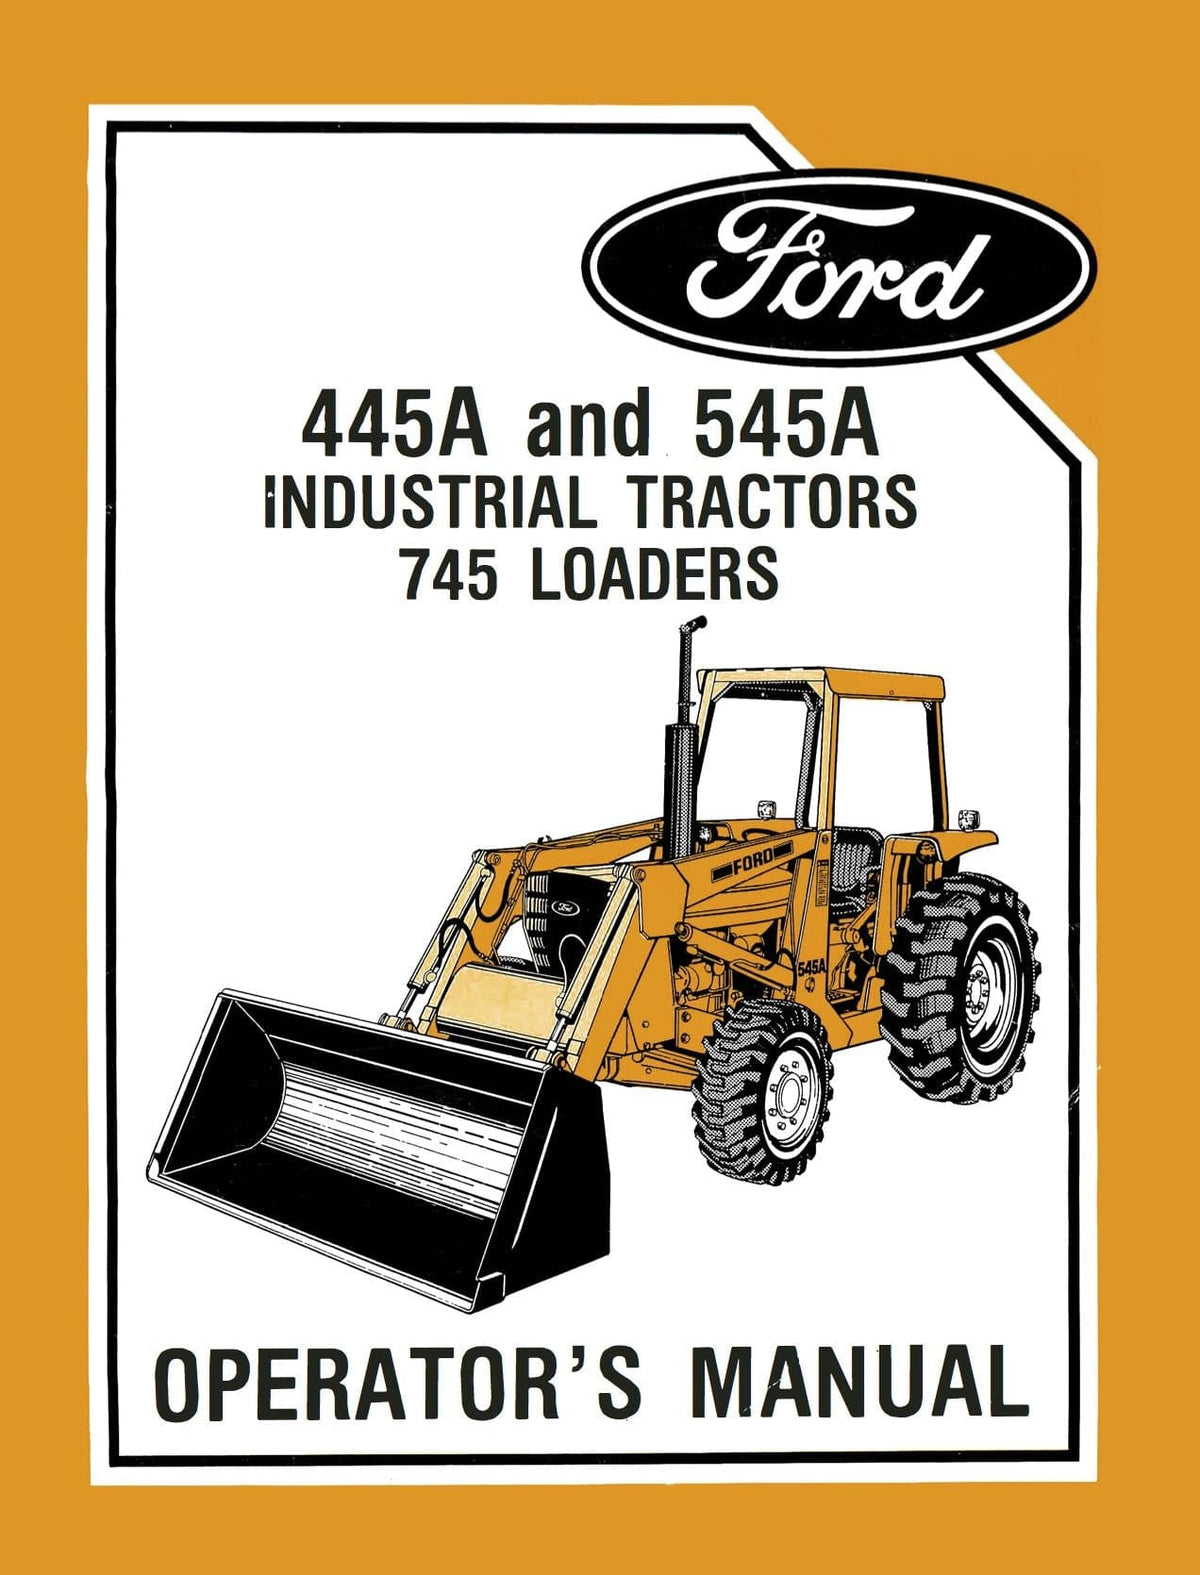 Ford 445A and 545A Industrial Tractors 745 Loaders - Operator's Manual - Ag Manuals - A Provider of Digital Farm Manuals - 1